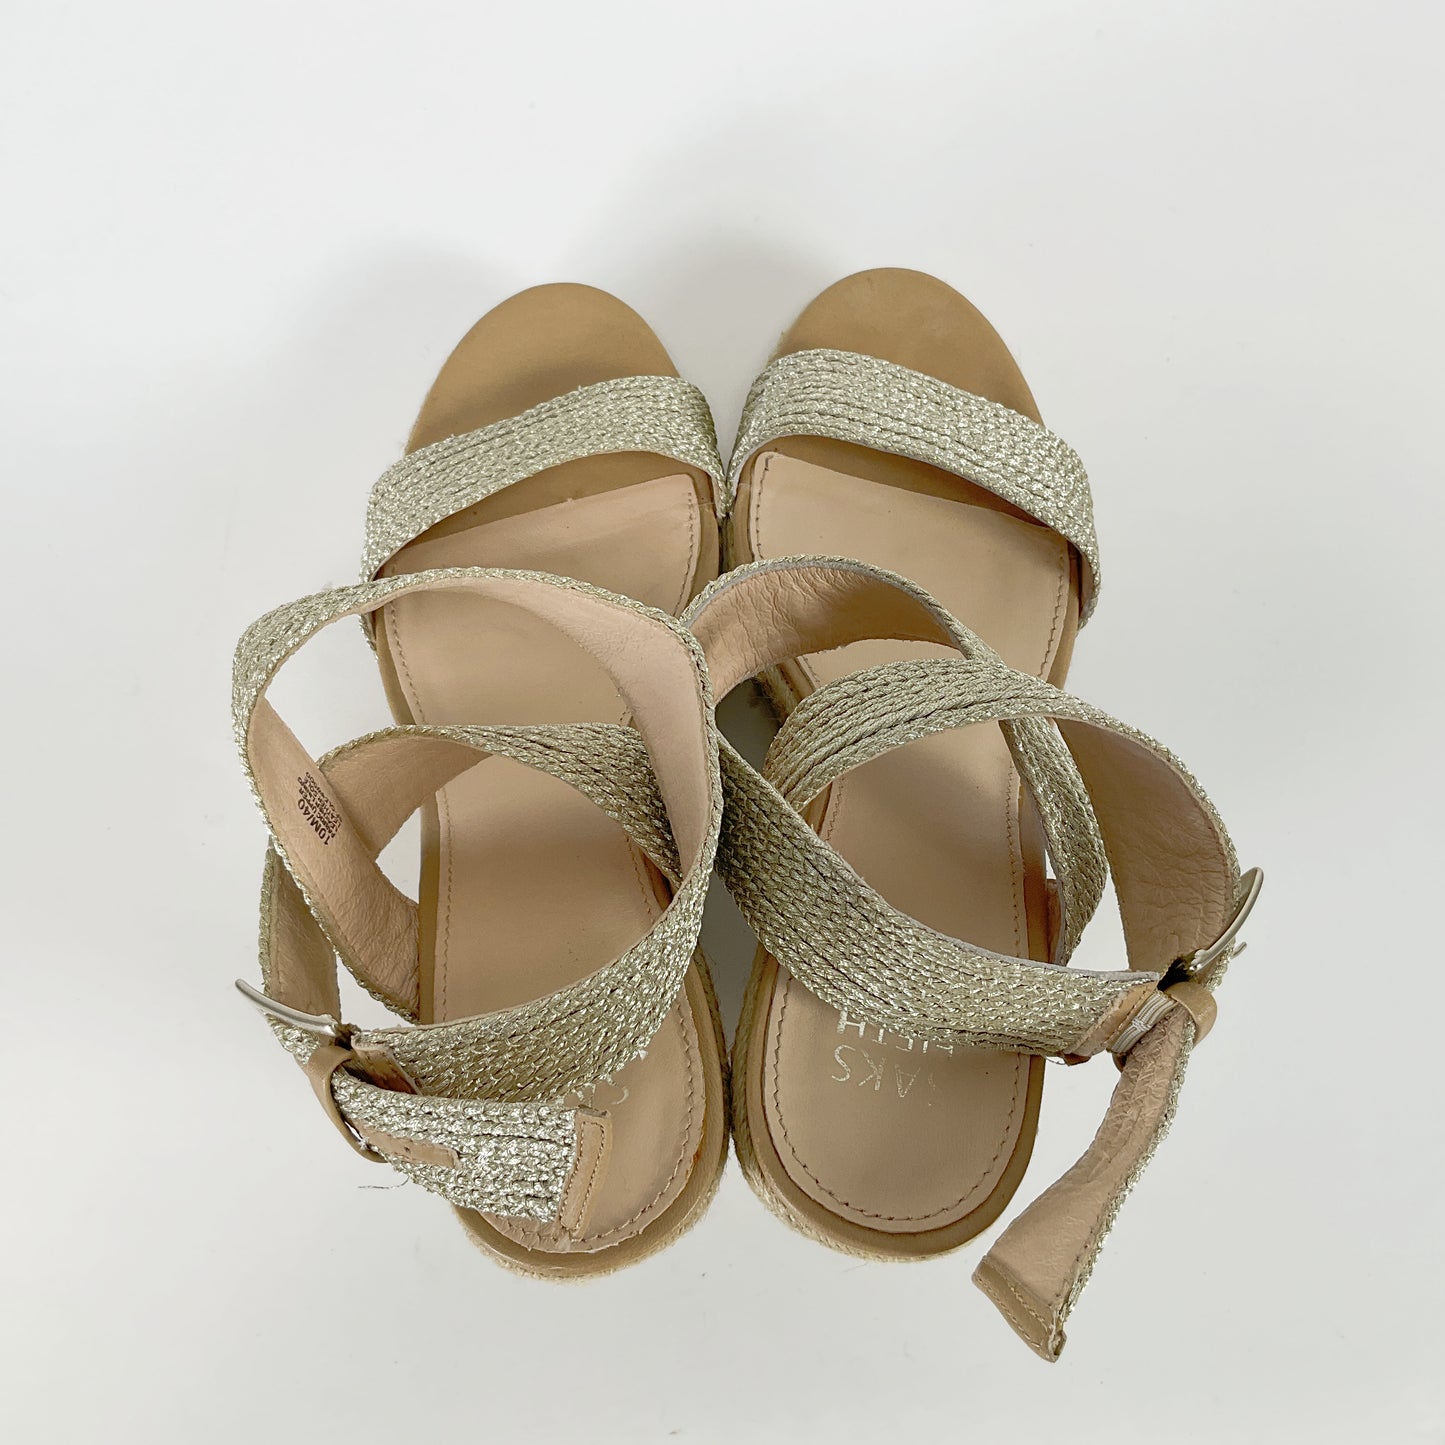 SAKS Fifth Avenue - Redwood Sandals Shoes